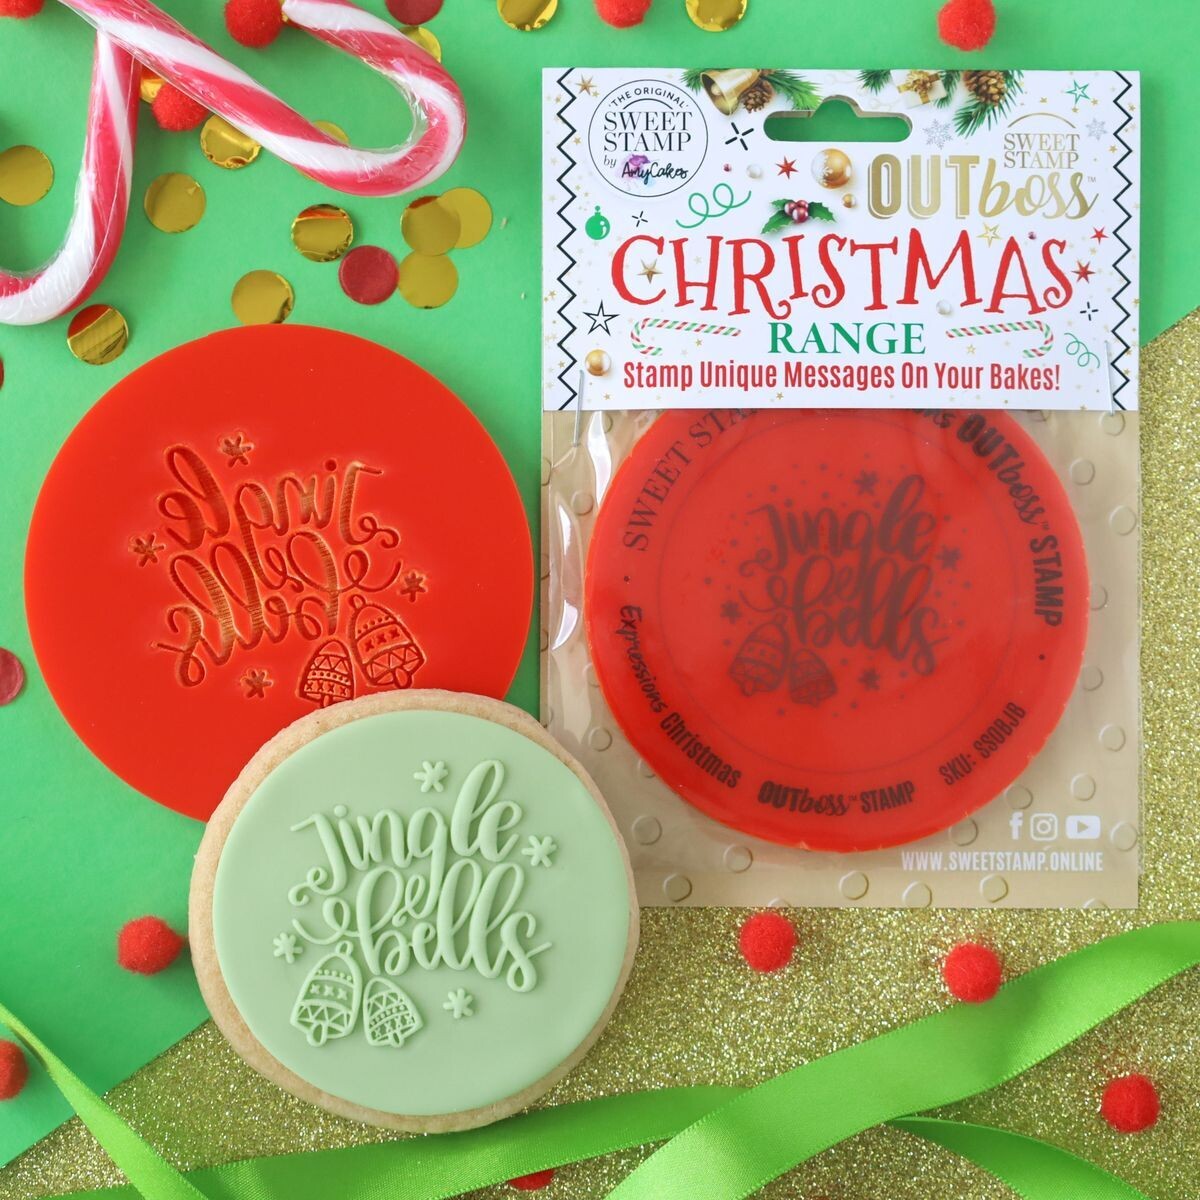 Sweet Stamp -OUTboss Christmas - JINGLE BELLS - Χριστουγεννιάτικη Σφραγίδα